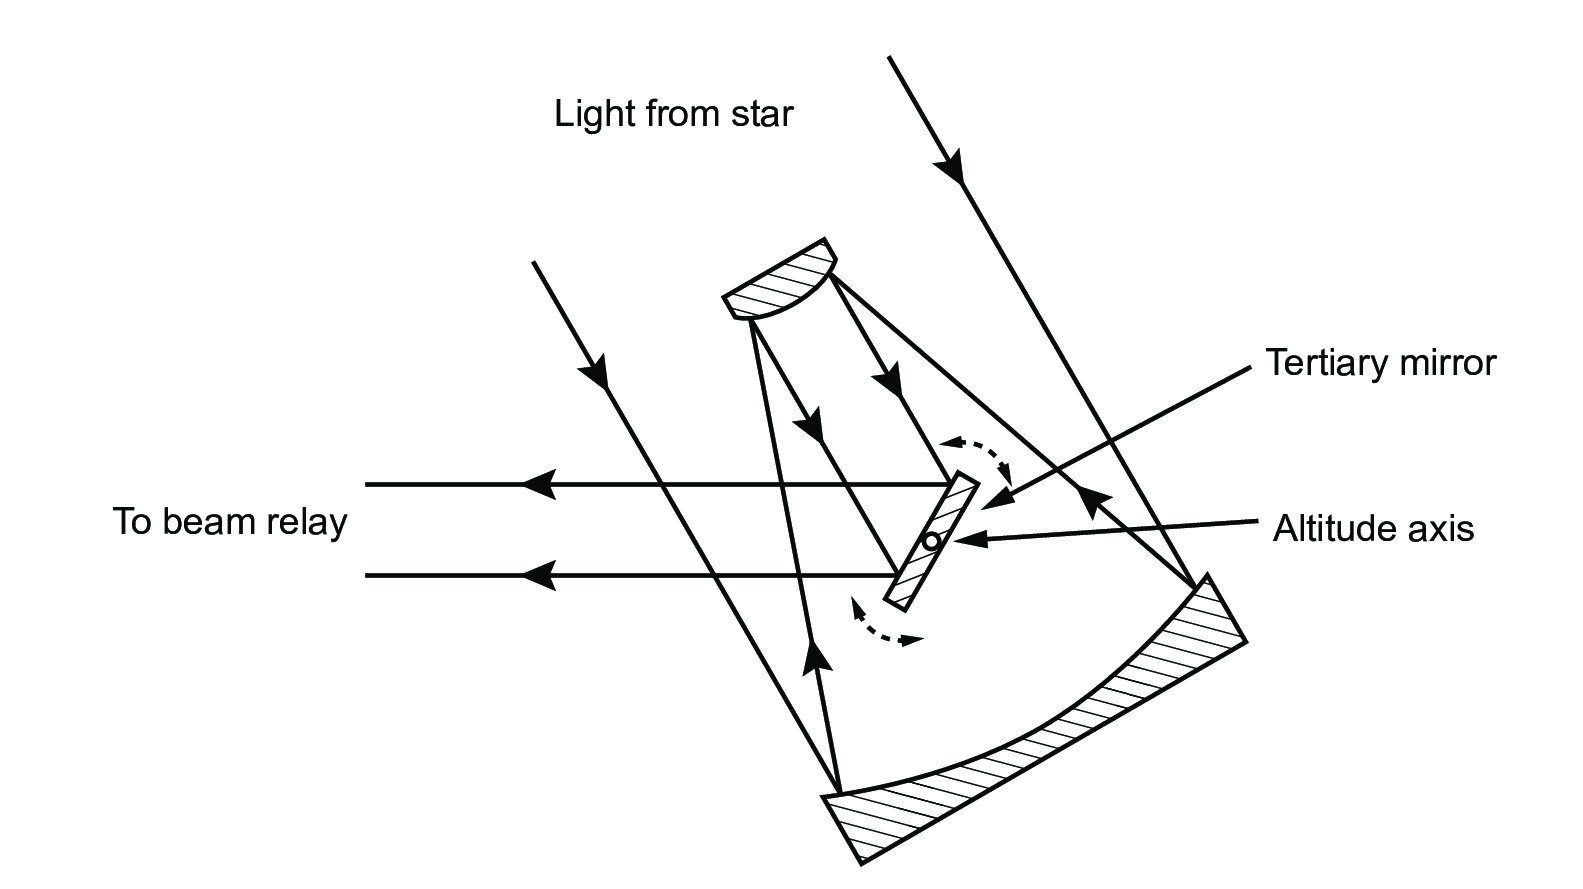 figs/alt-alt-telescope.png